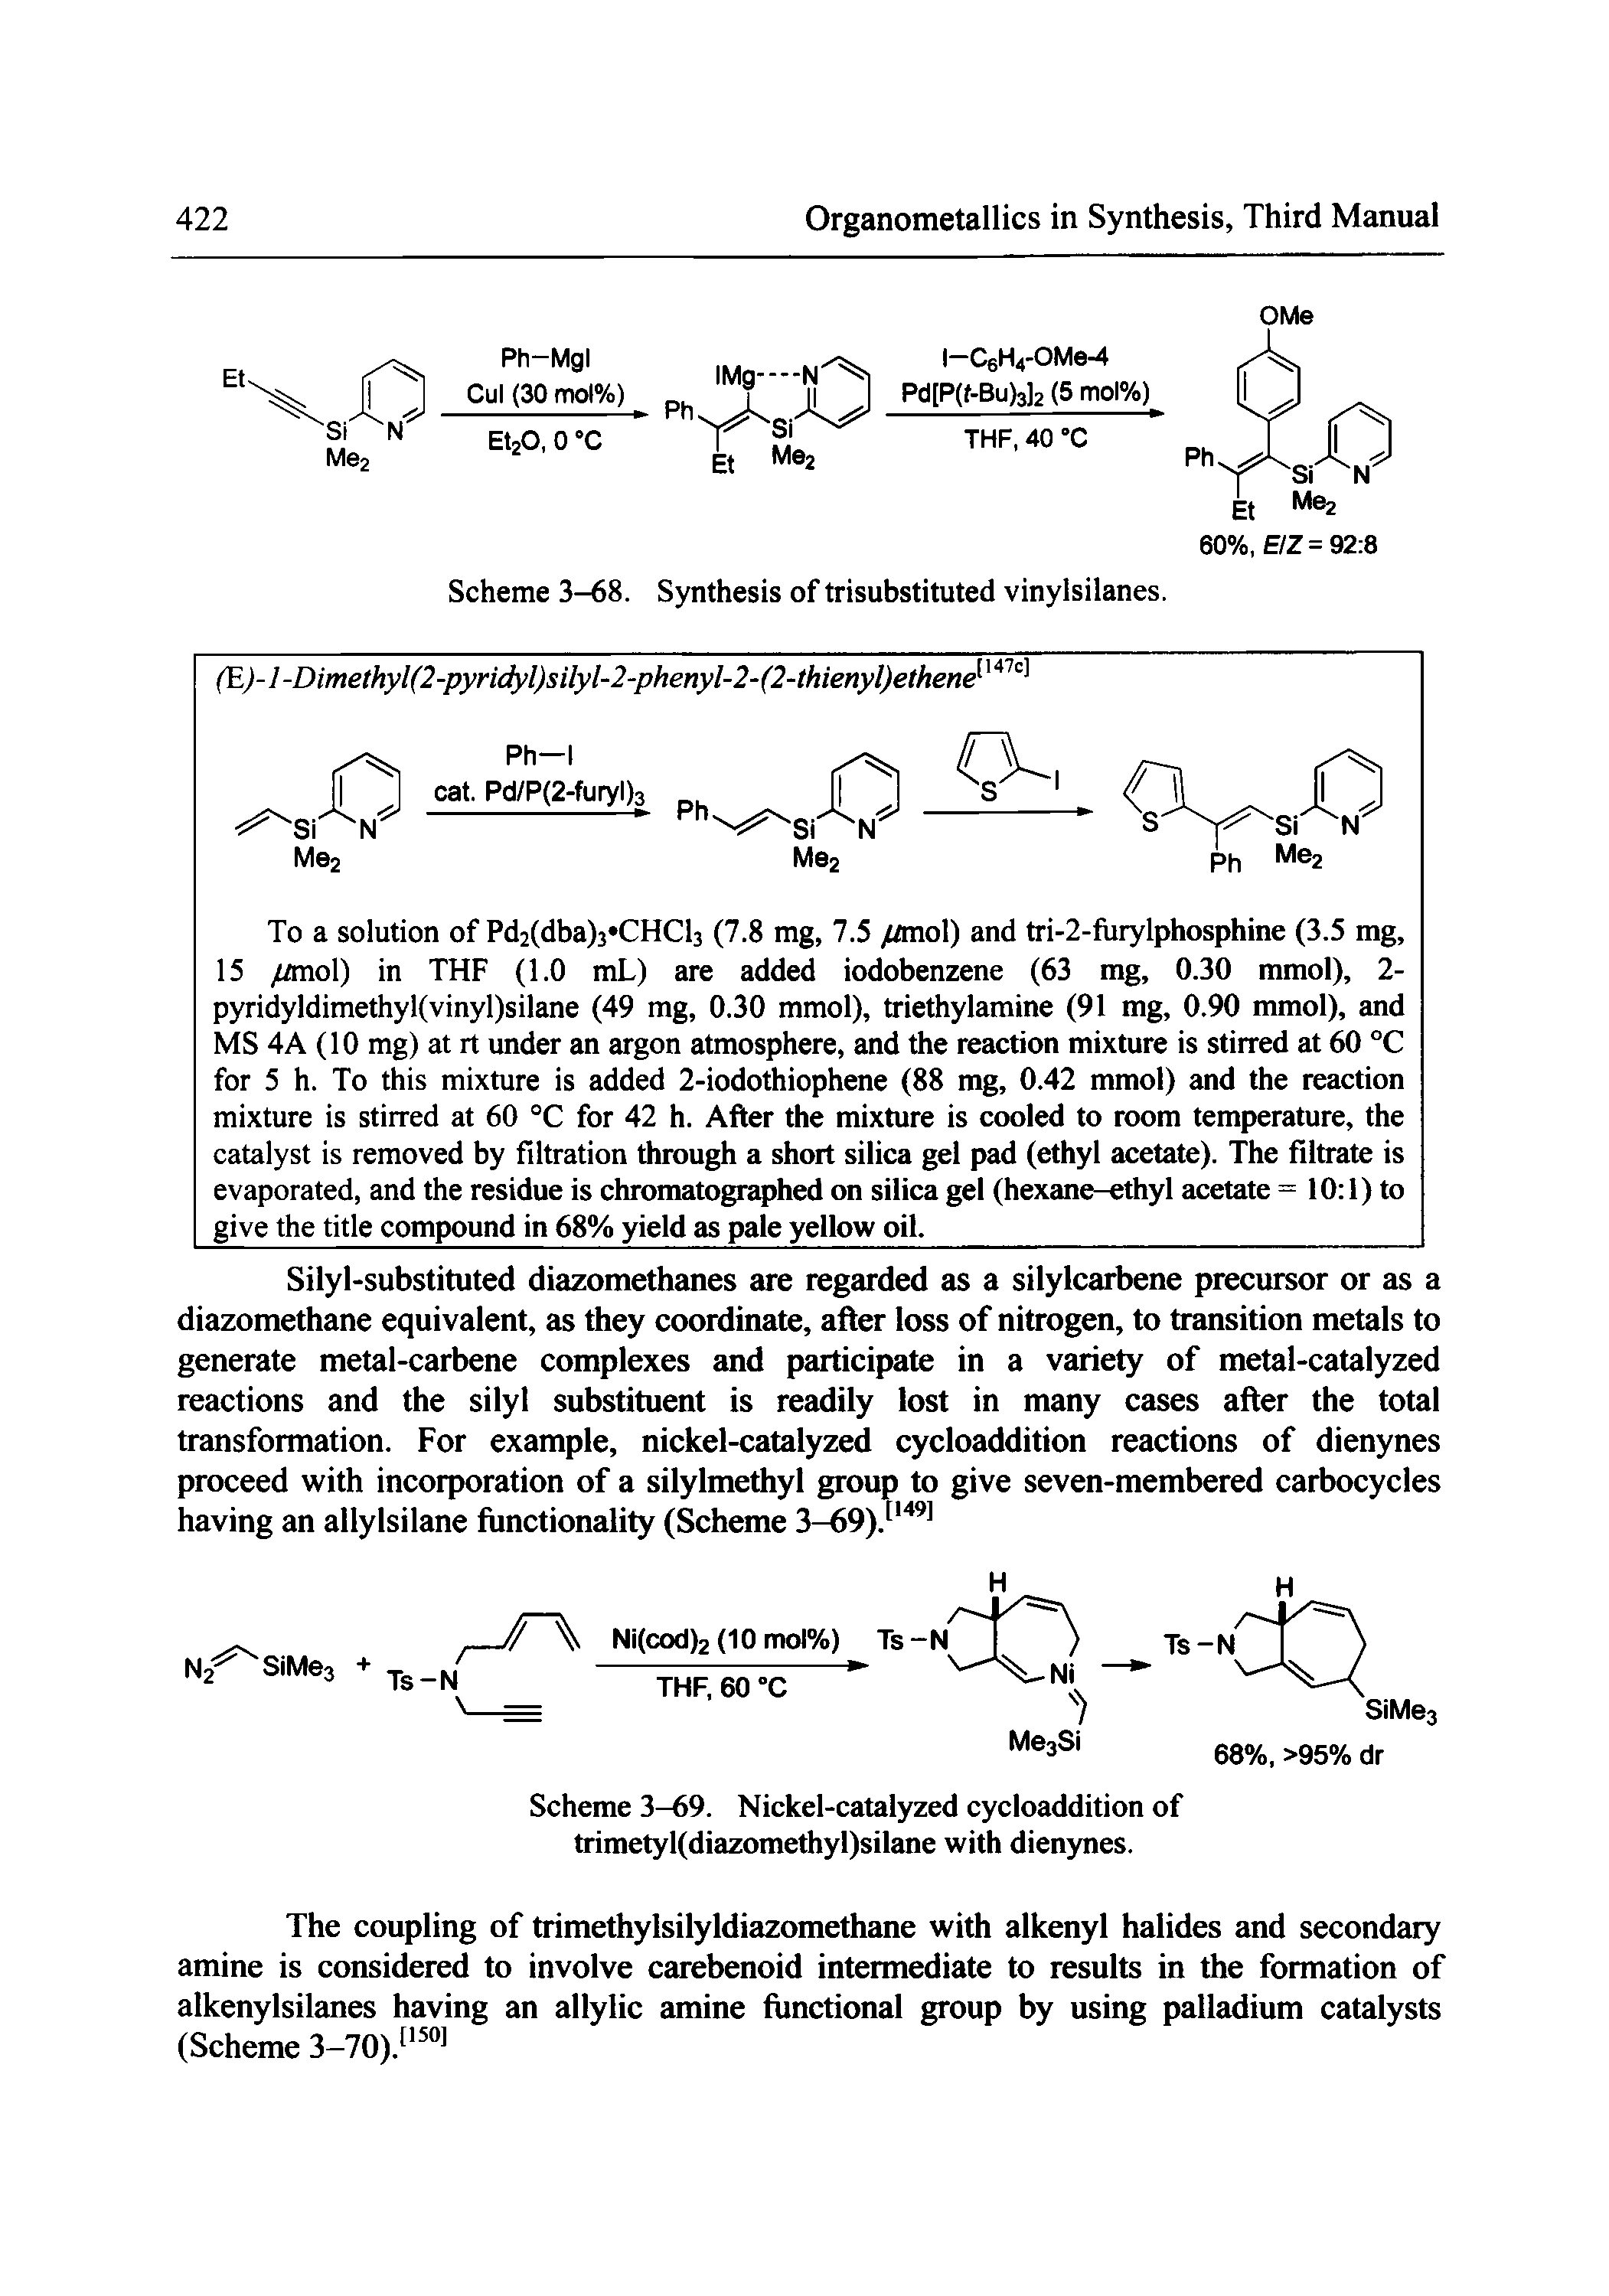 Scheme 3-69. Nickel-catalyzed cycloaddition of trimetyl(diazomethyl)silane with dienynes.